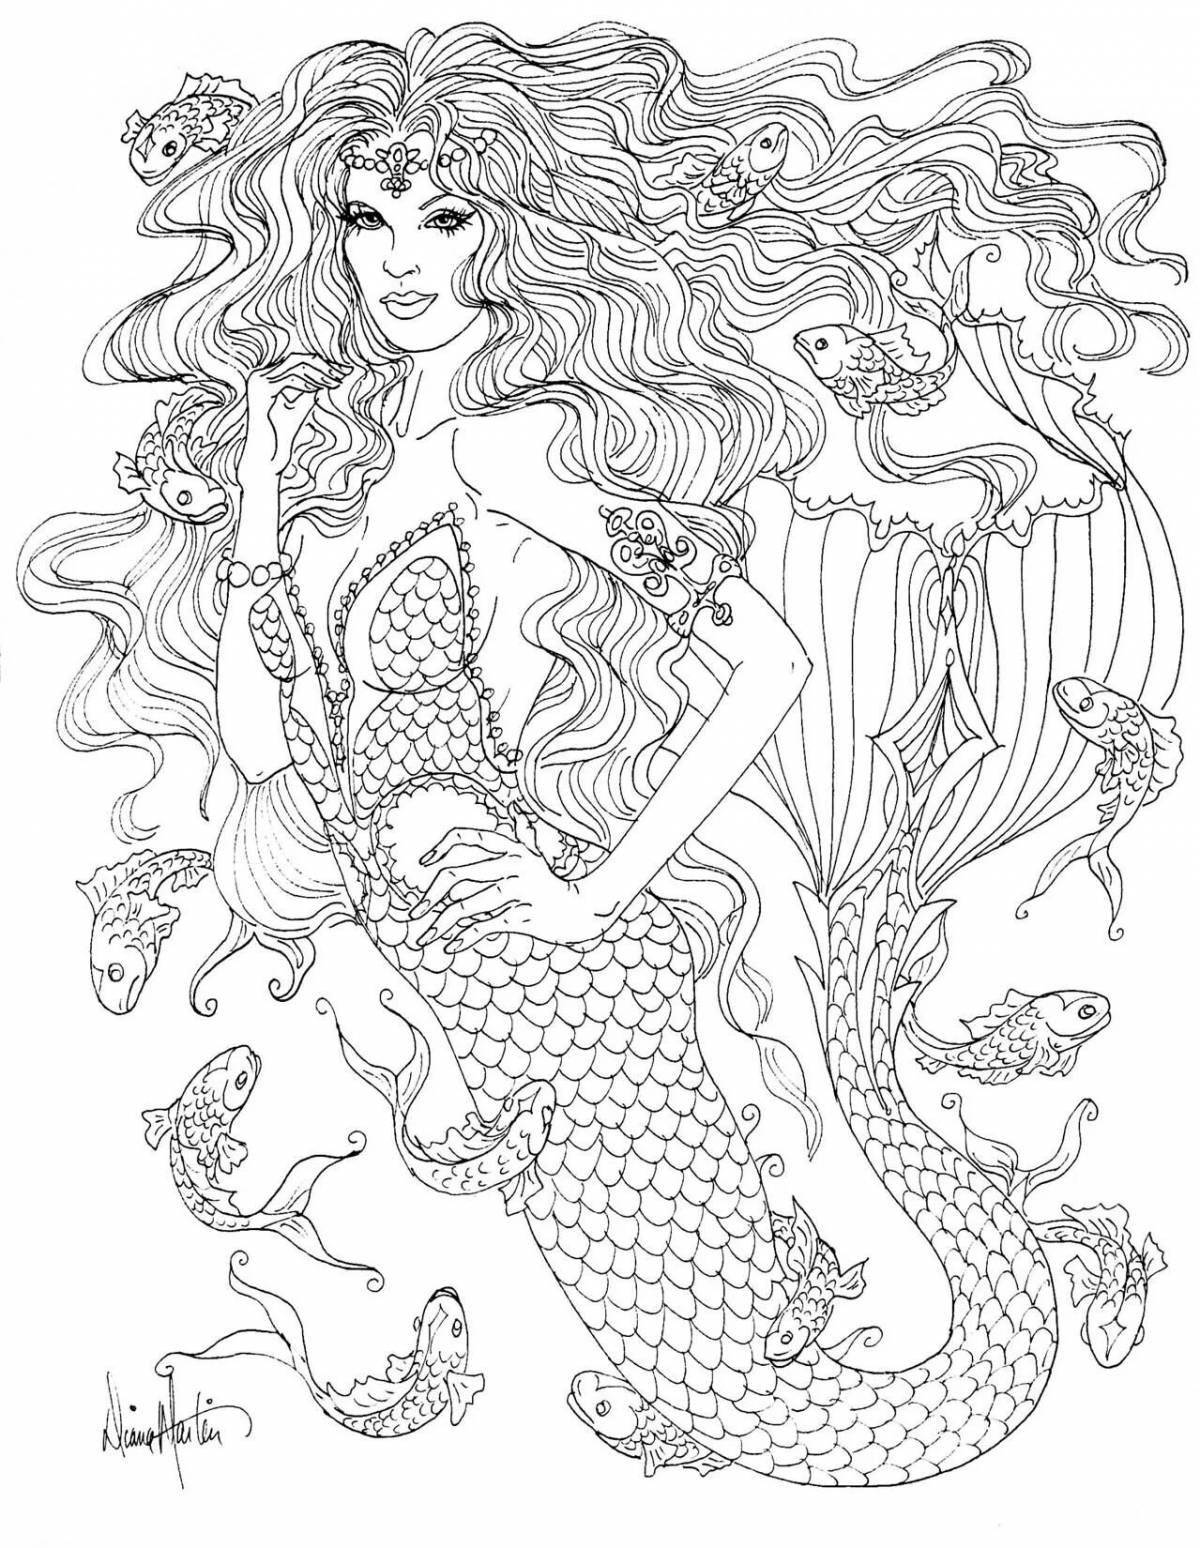 Inspirational anti-stress mermaid coloring book